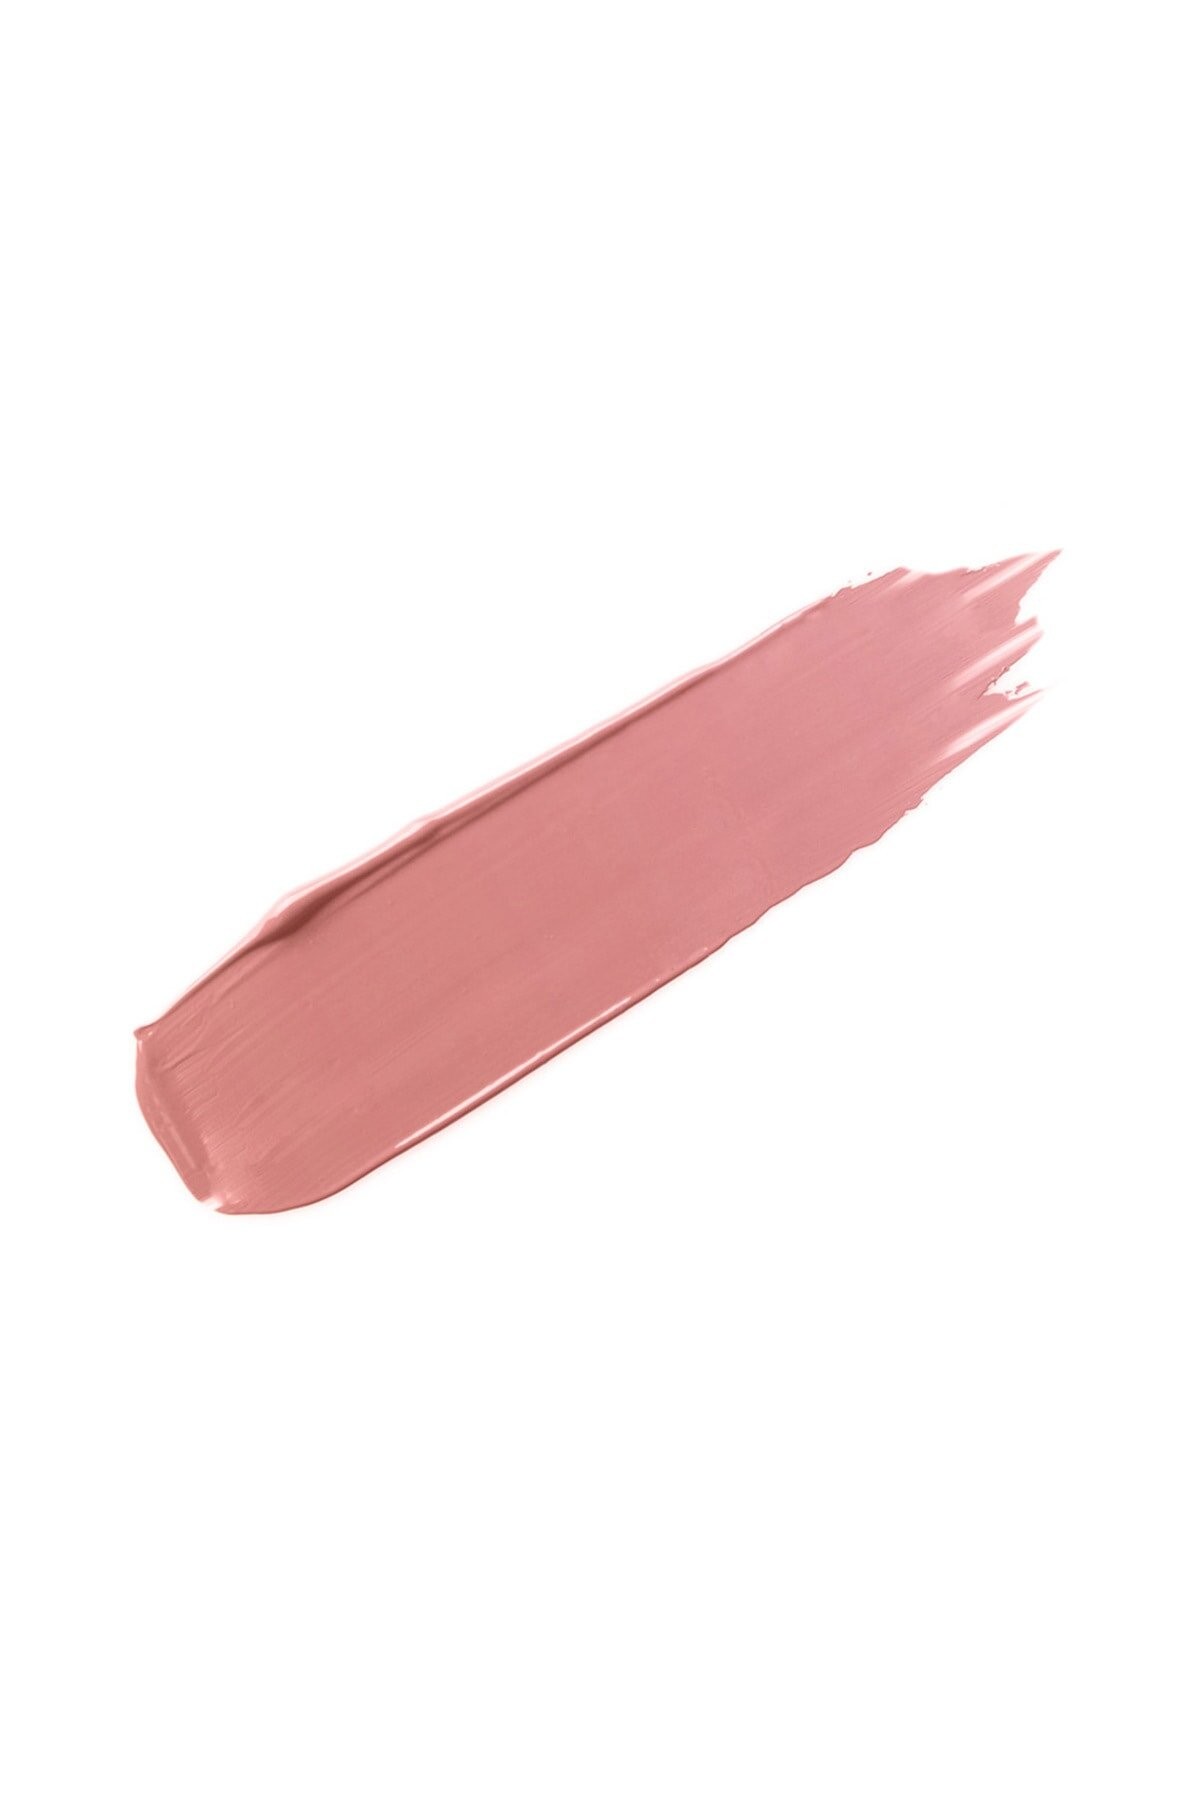 Creamy Delight Lipstick Pink Nude